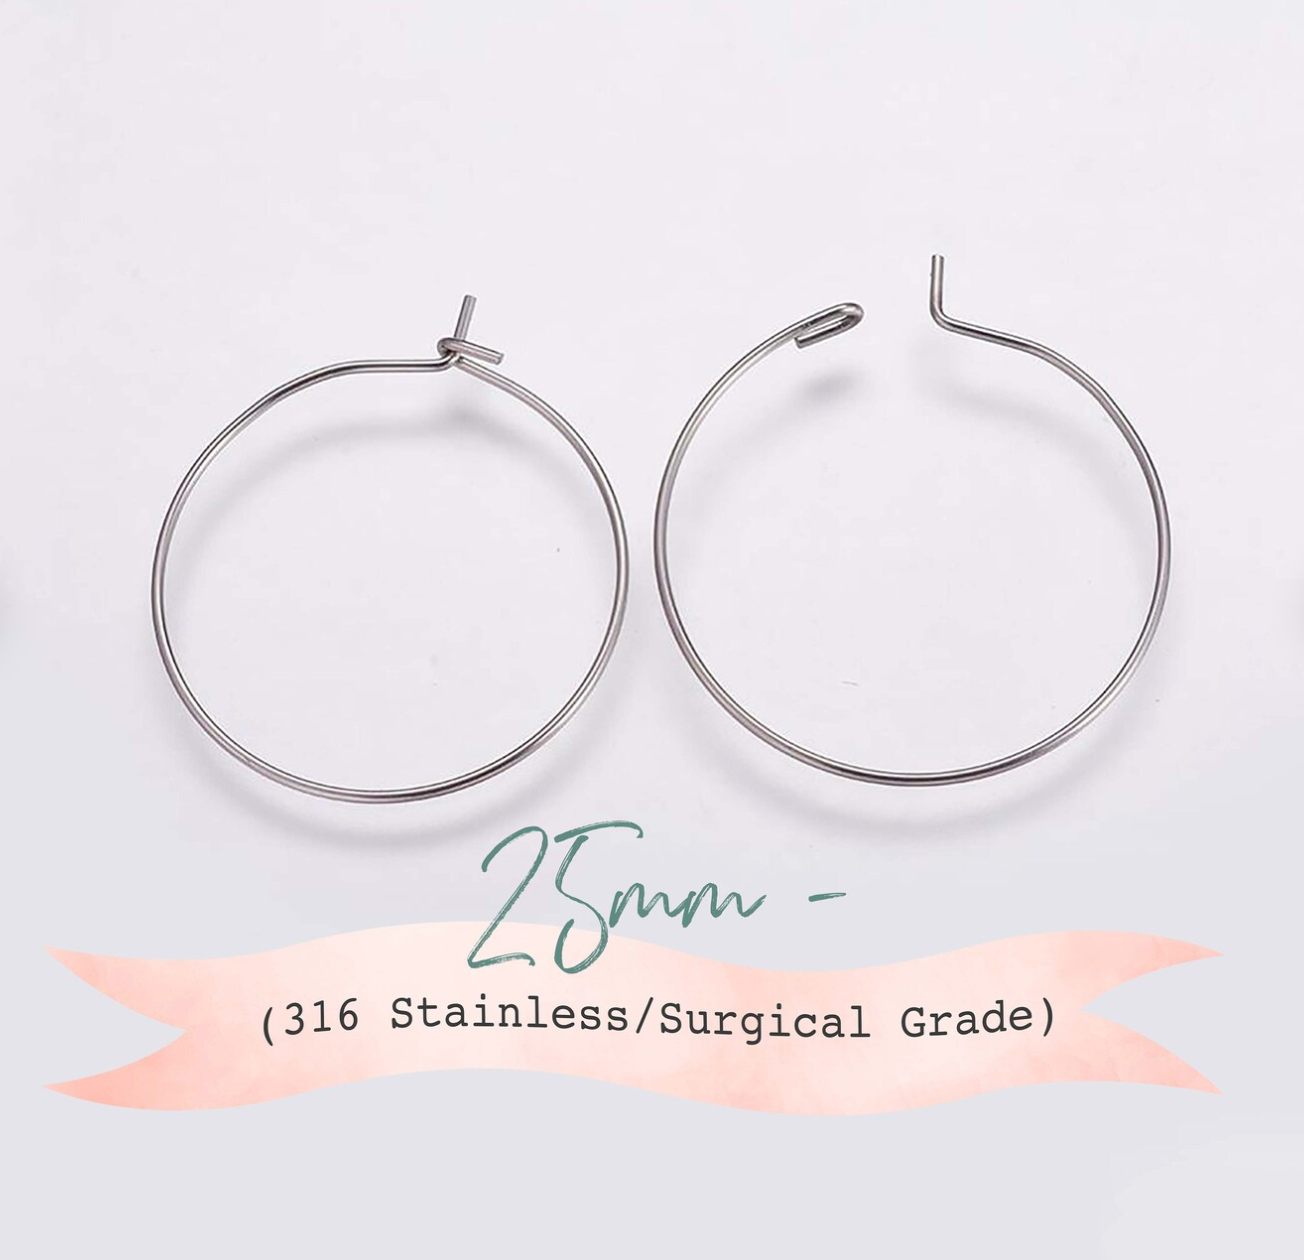 25mm, 316 Stainless Steel Hoop / Surgical Grade Hoops Earrings Findings, Wine Glass Charms Findings in Stainless Steel Colour